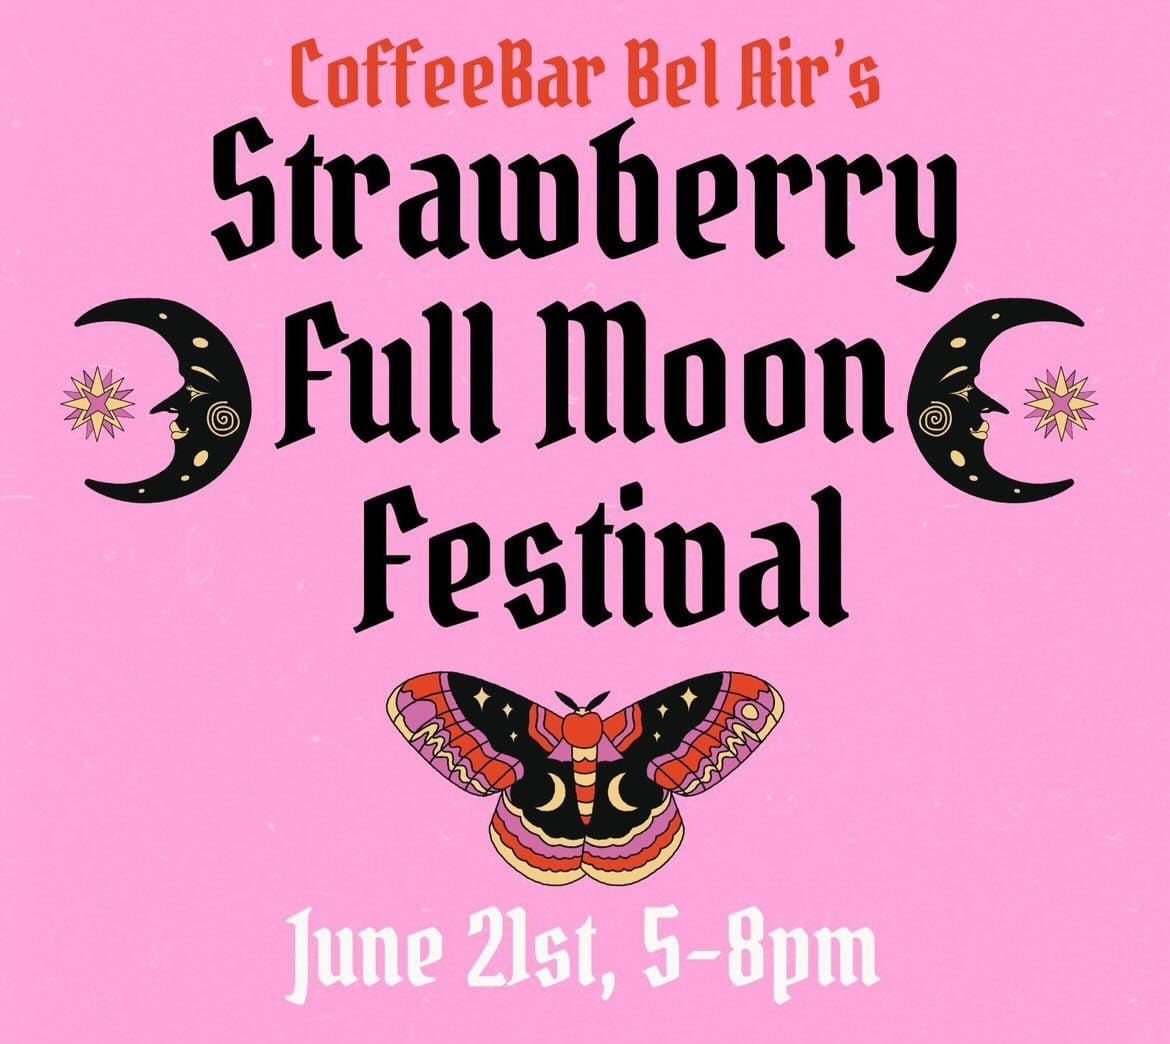 ATSD @ Strawberry Full Moon Festival by CoffeeBar Bel Air